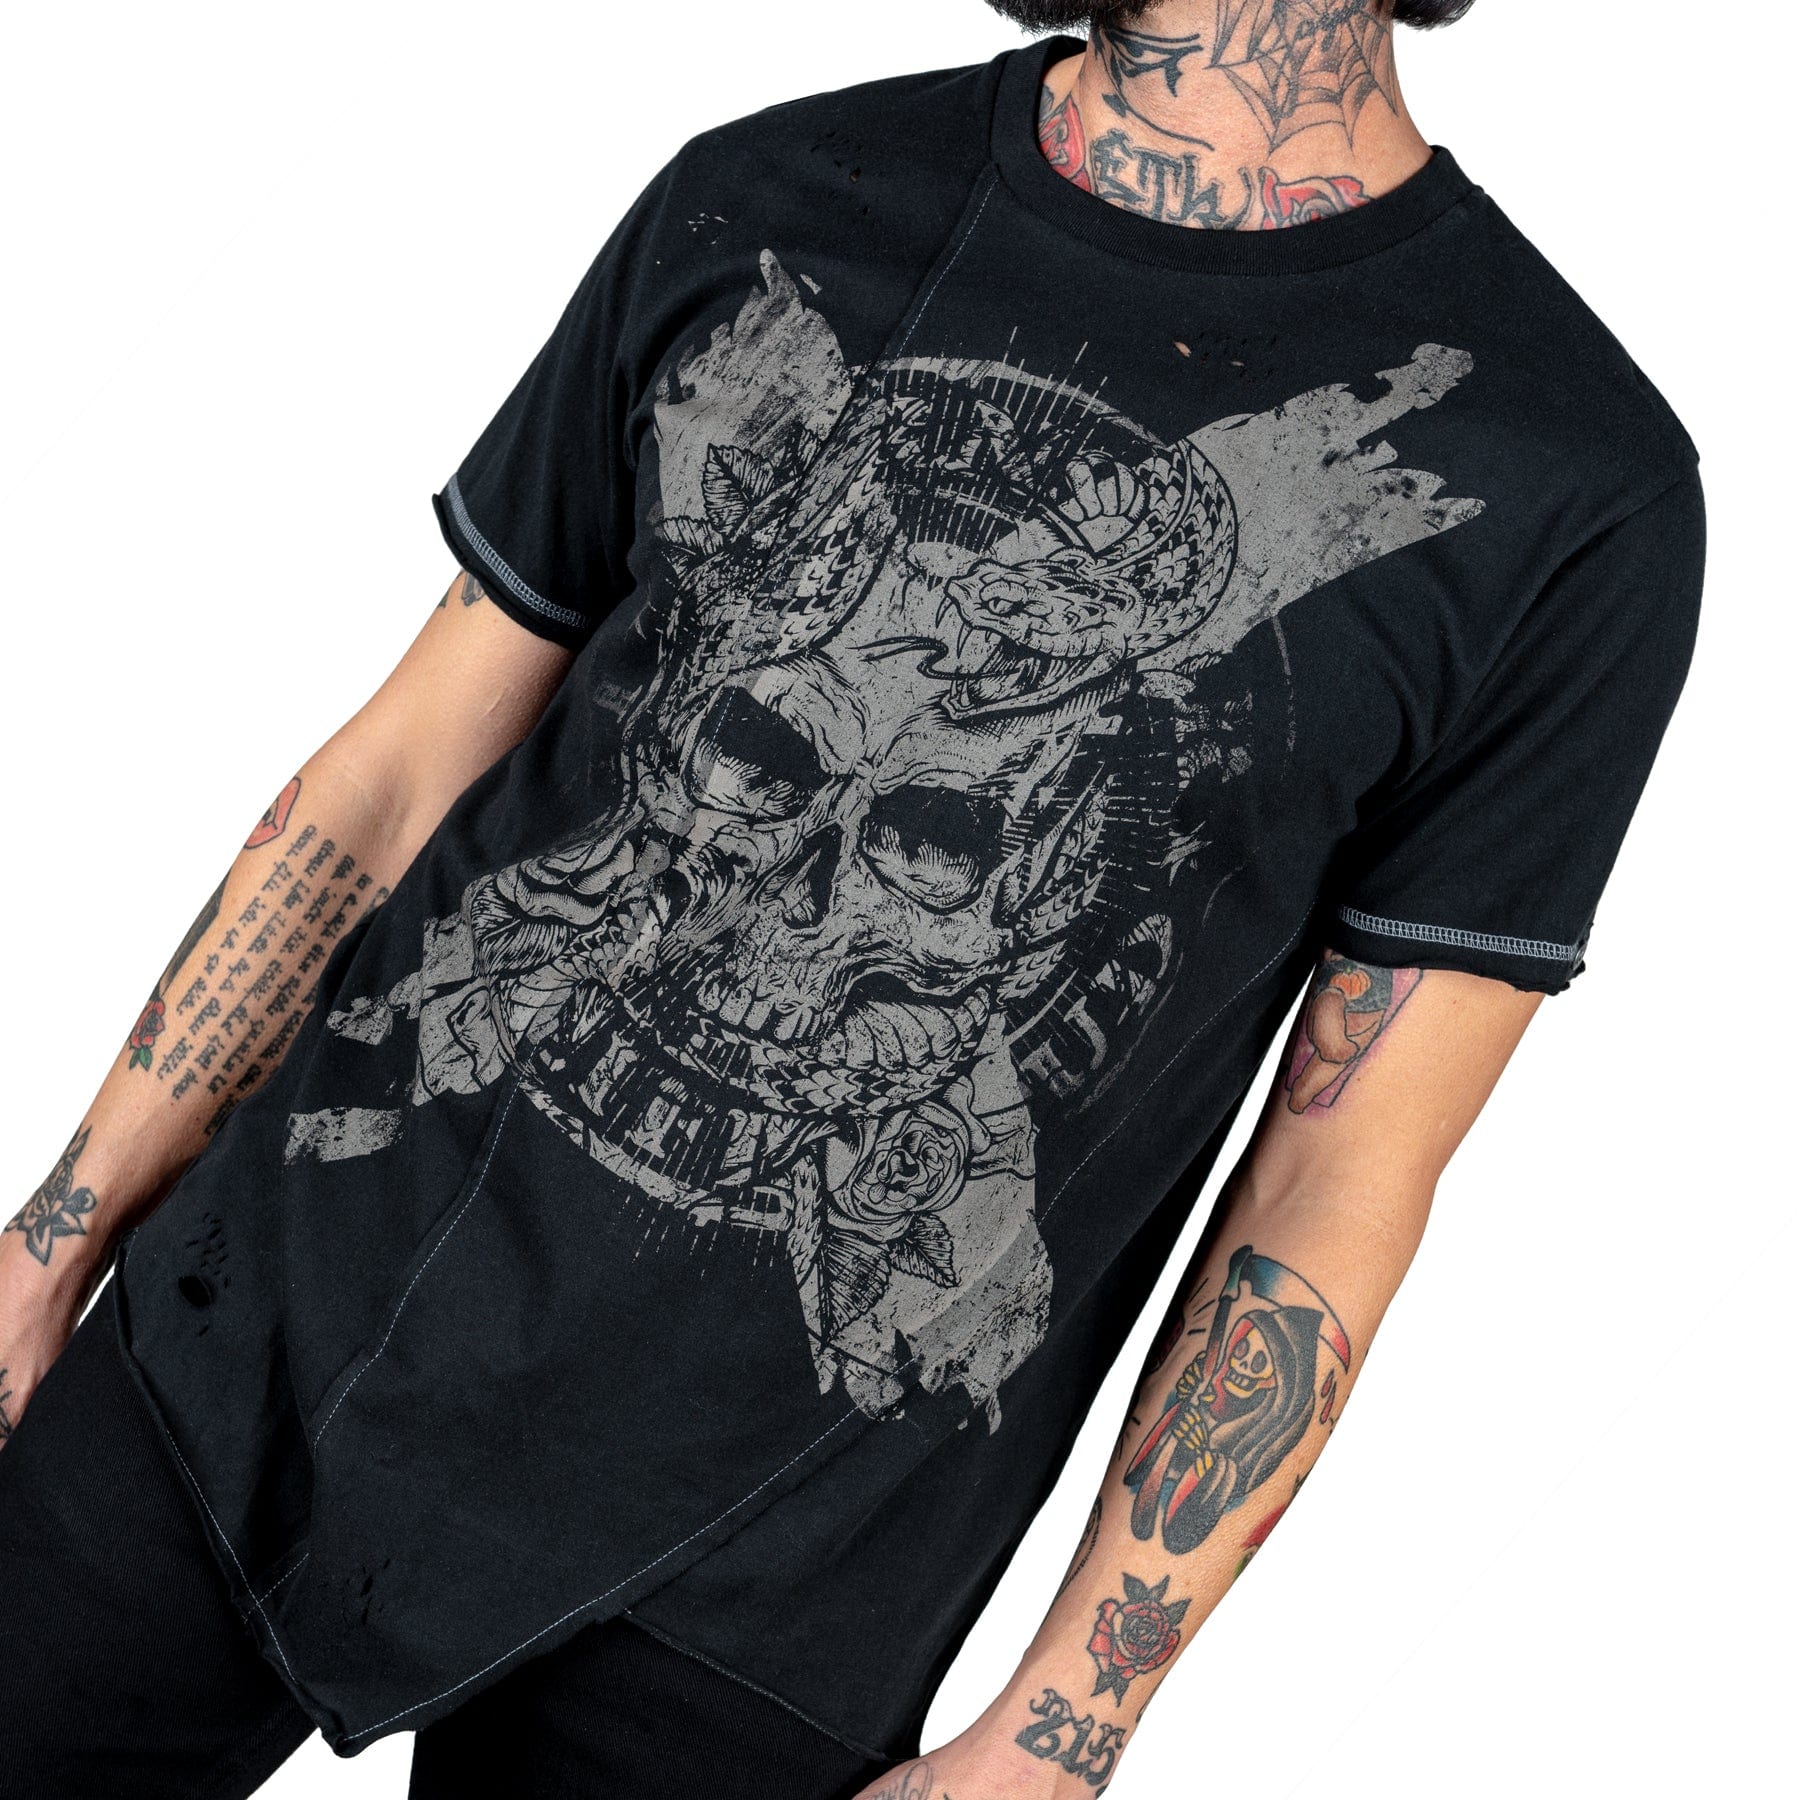 Wornstar Clothing Mens Tee. Xero Skull T-Shirt